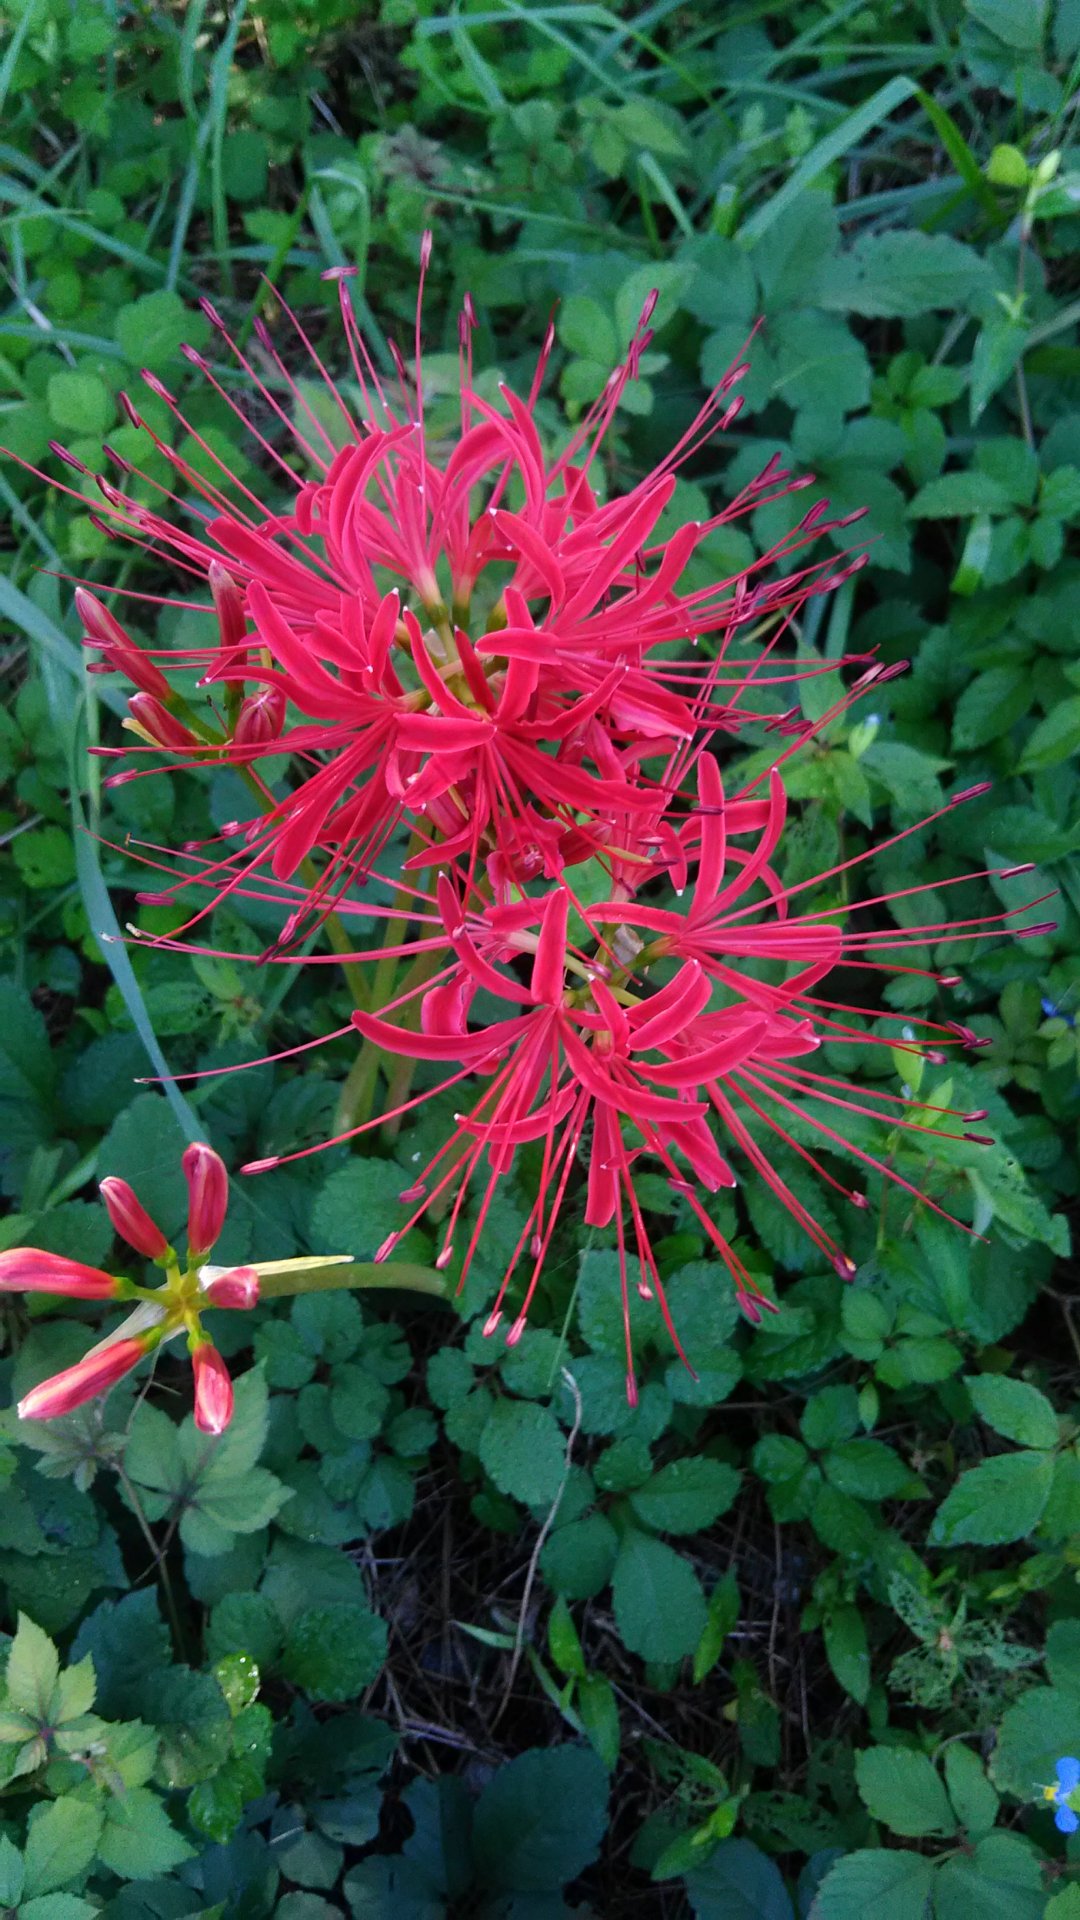 Red spider lillies.